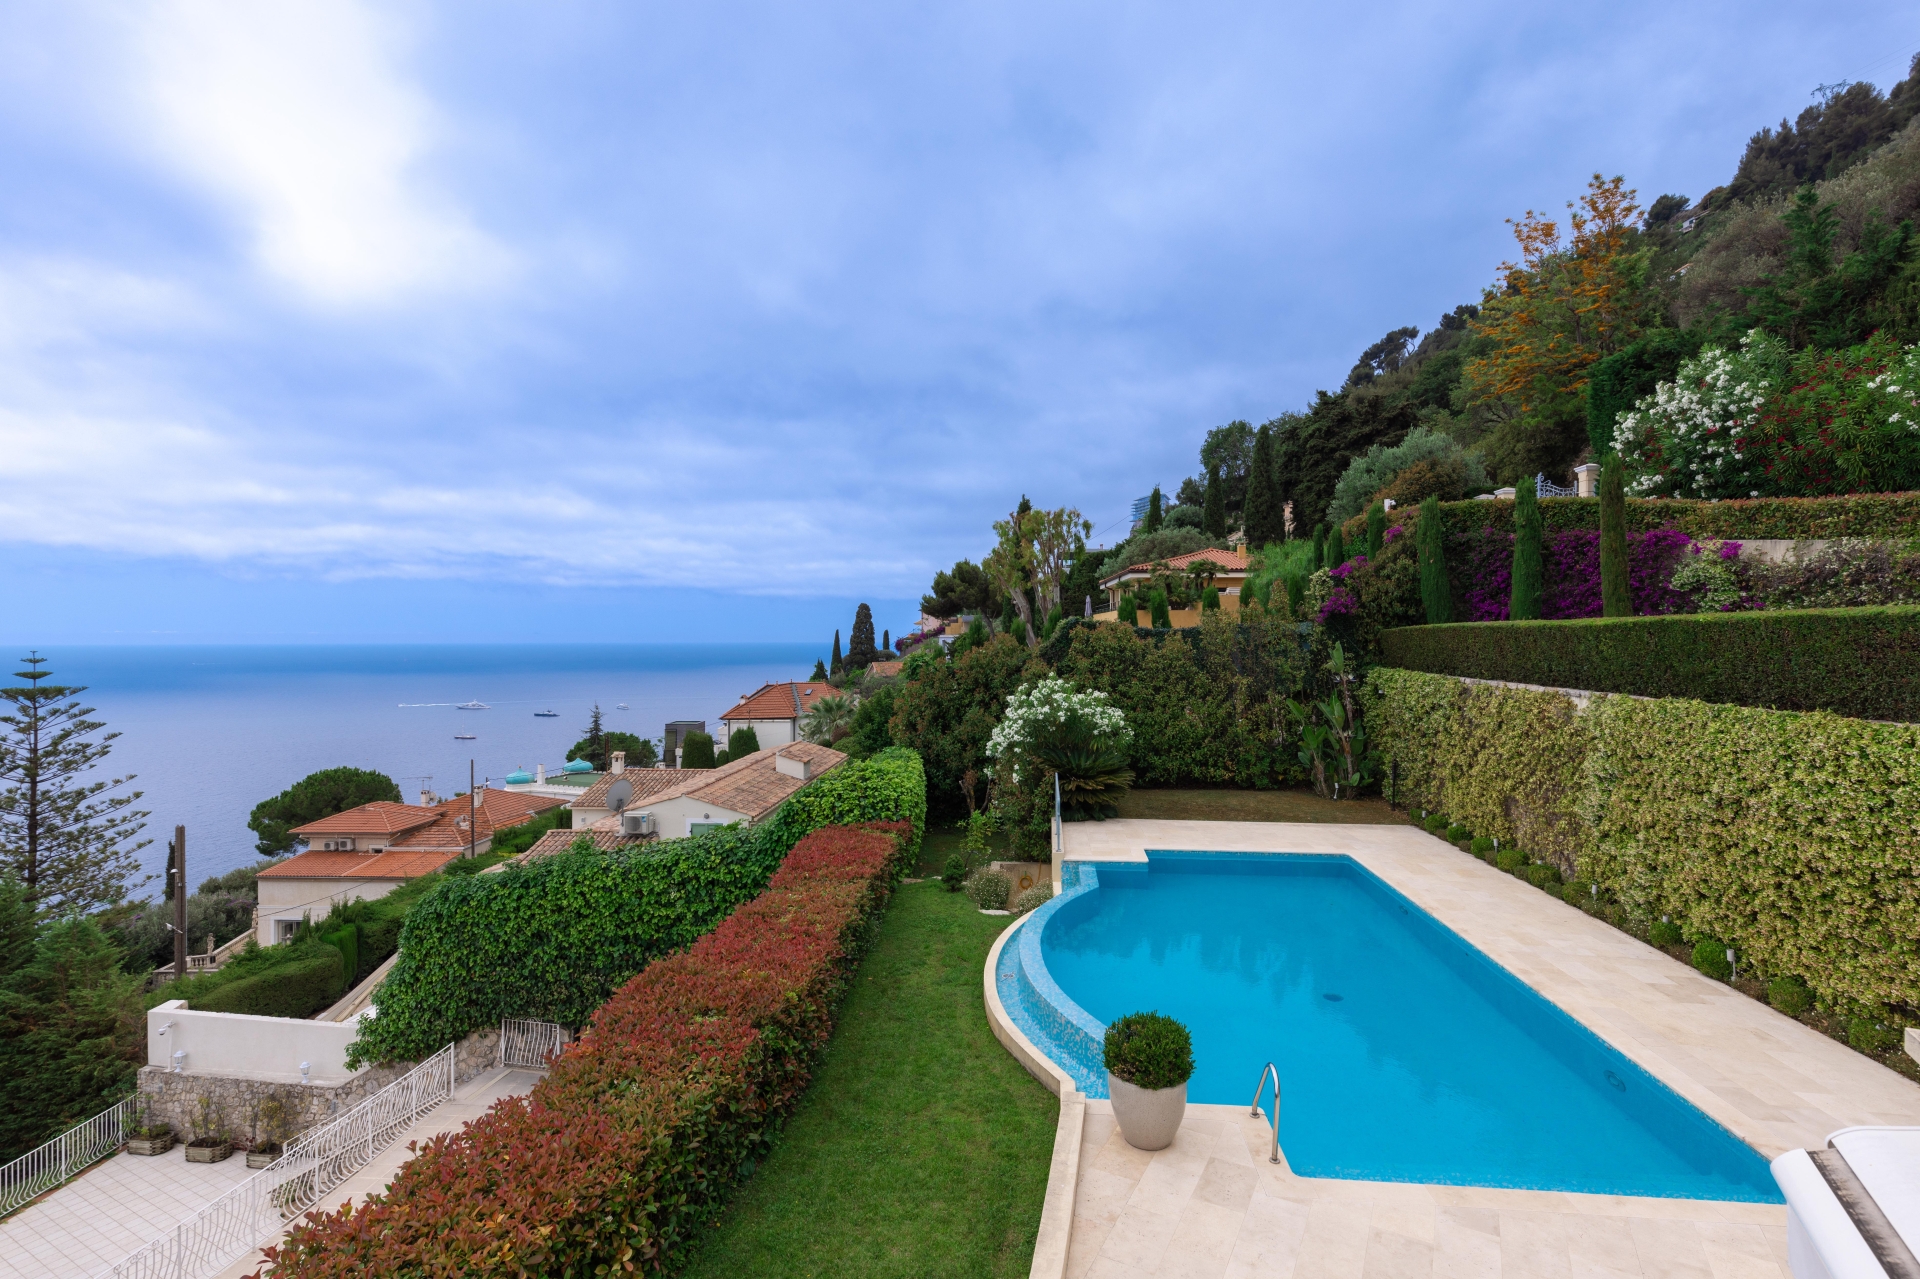 Dotta Villa a vendre - MARIE-CLAIRE - Roquebrune-Cap-Martin - Roquebrune-Cap-Martin - img074a9676